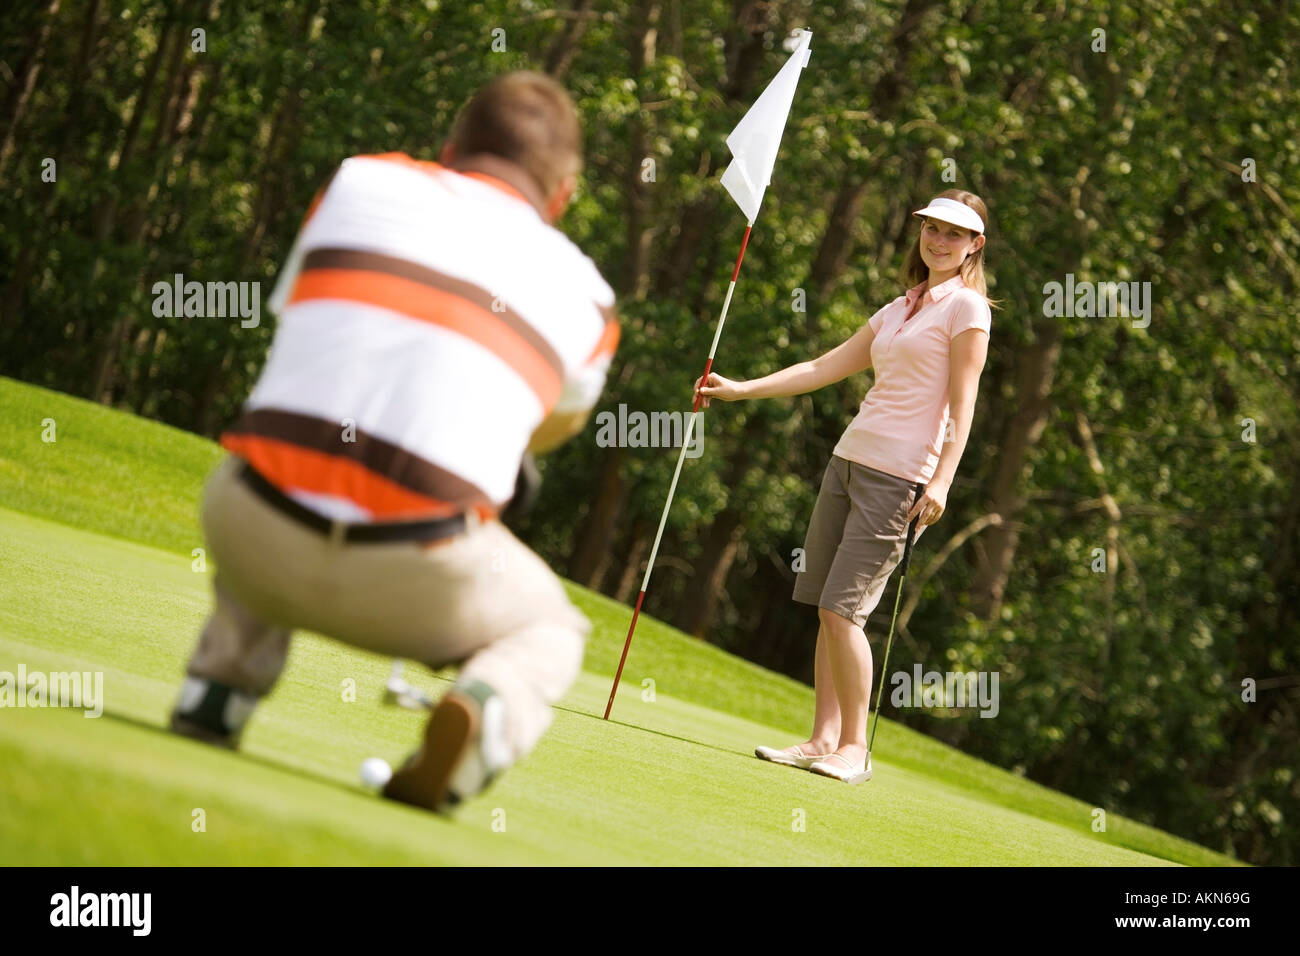 Man and woman golfing Stock Photo